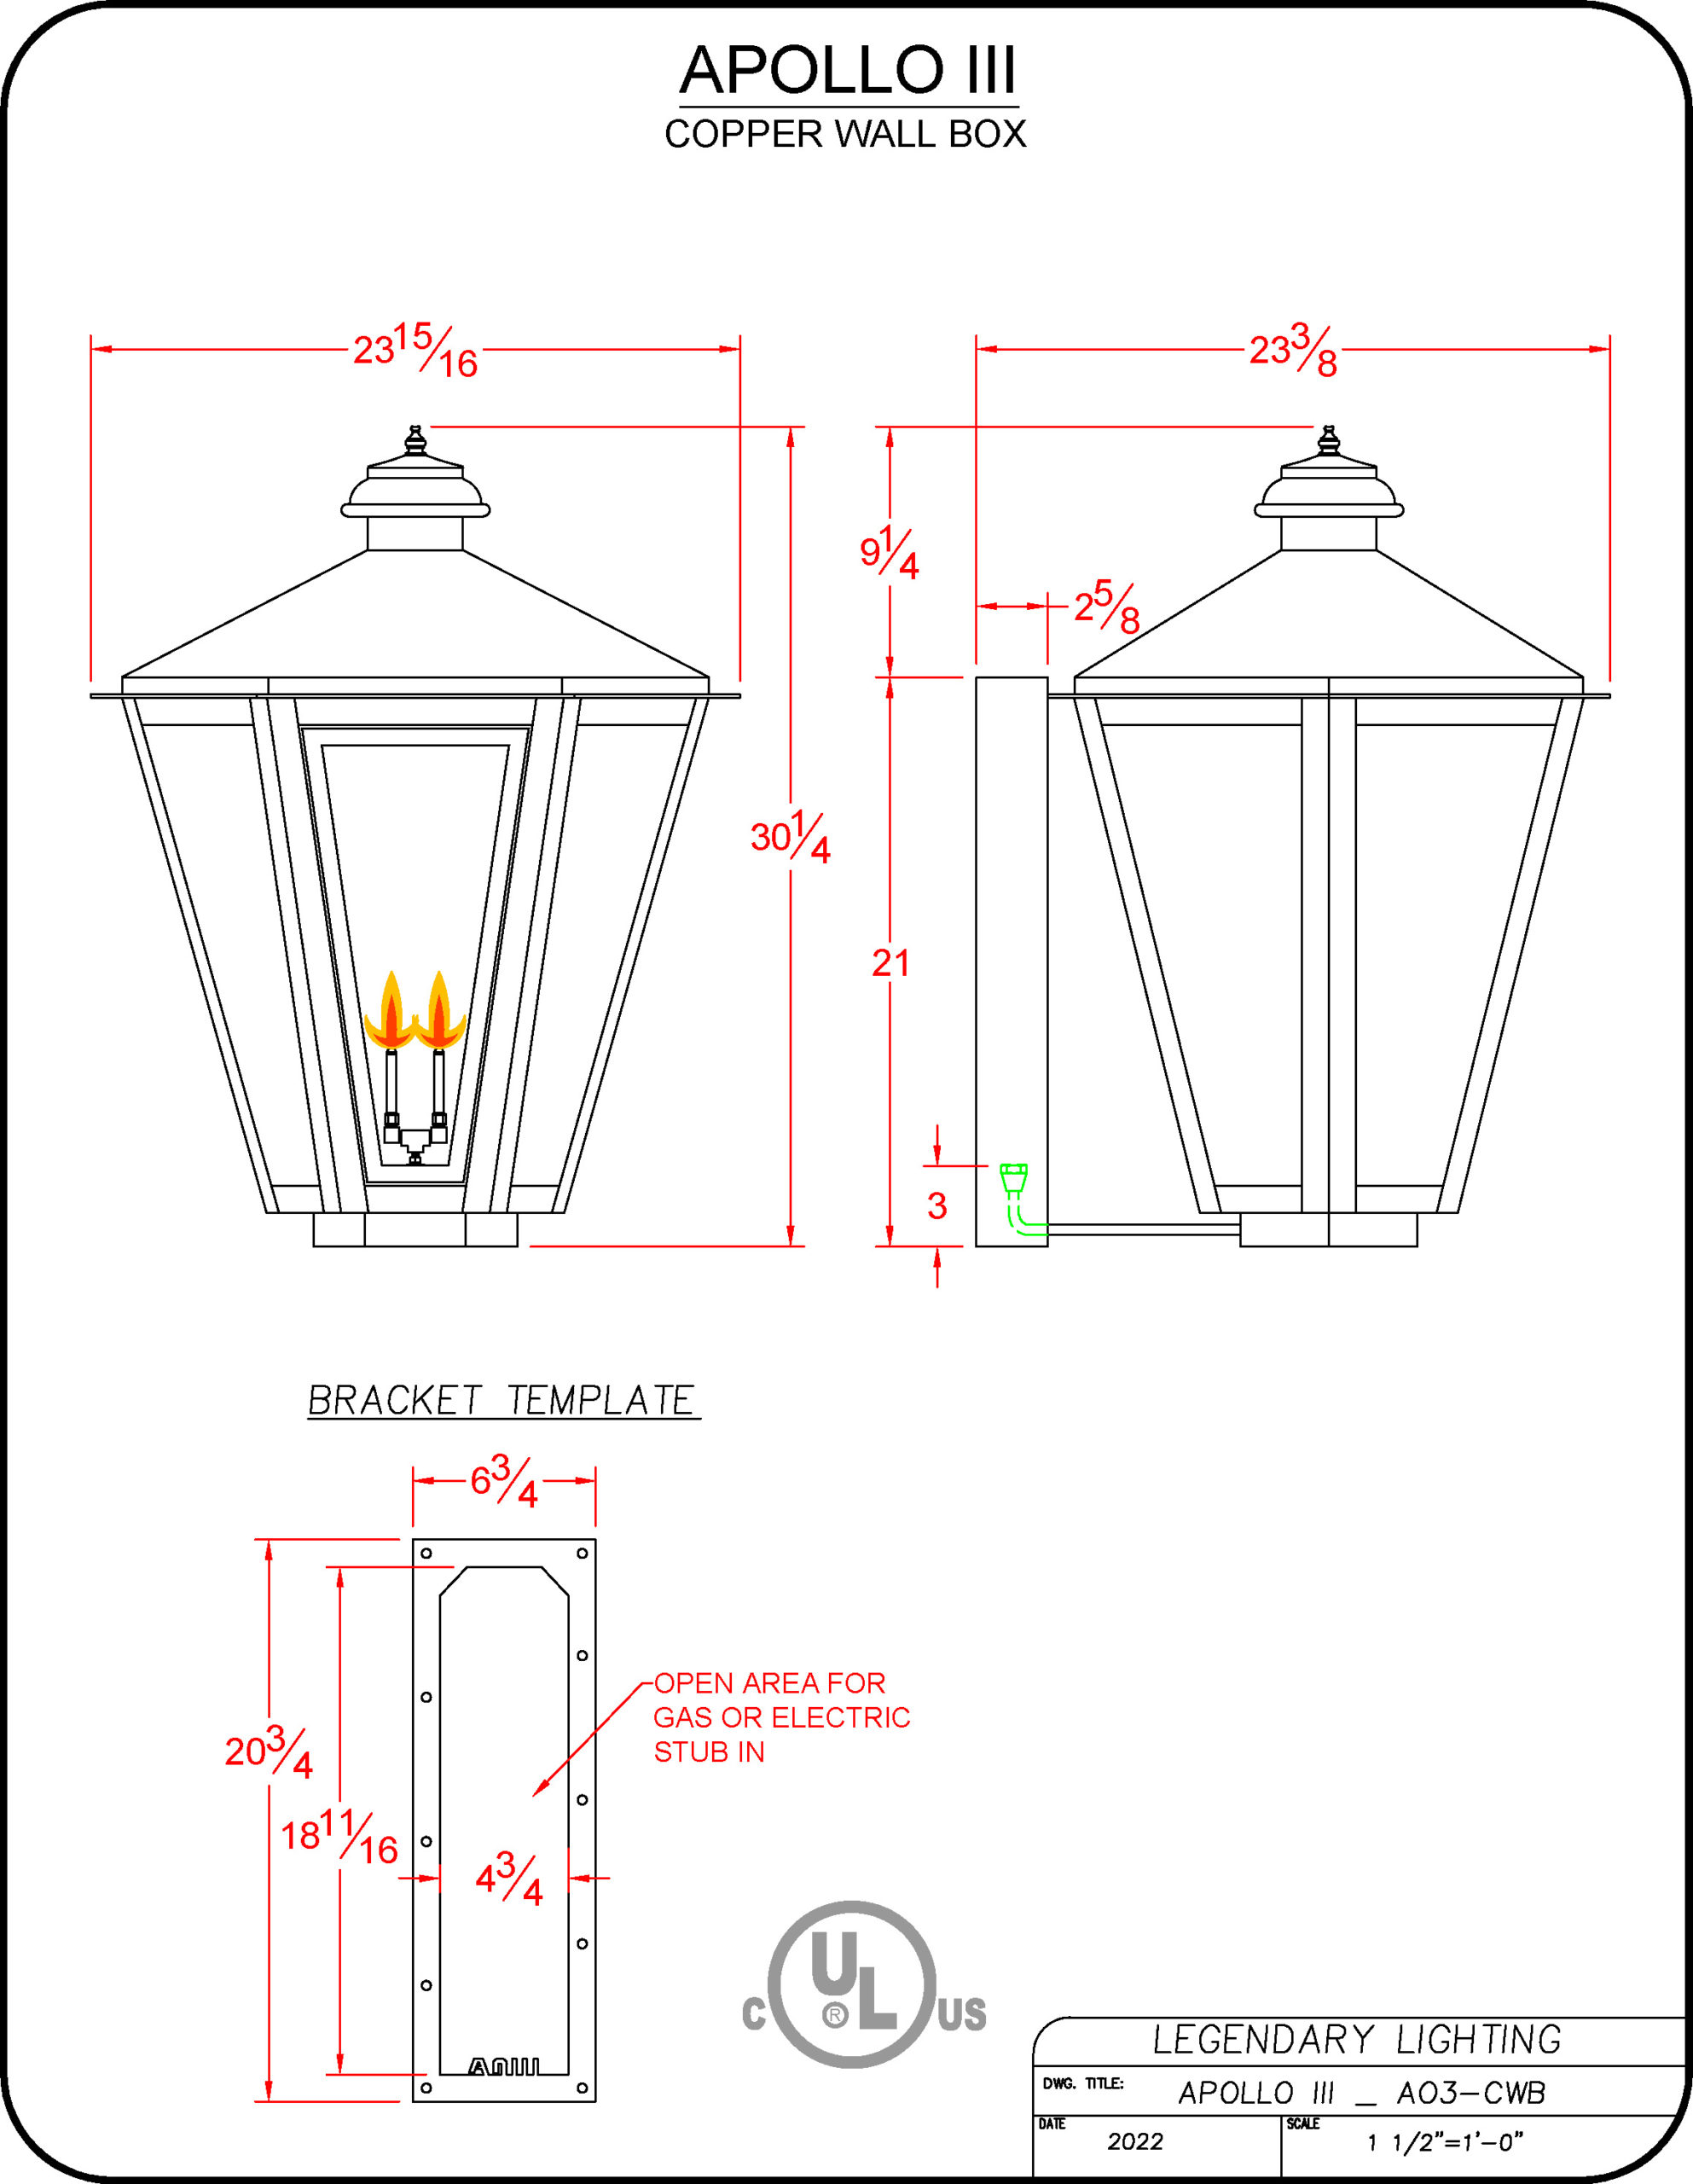 Apollo - Legendary Lighting Gas & Electric Lanterns